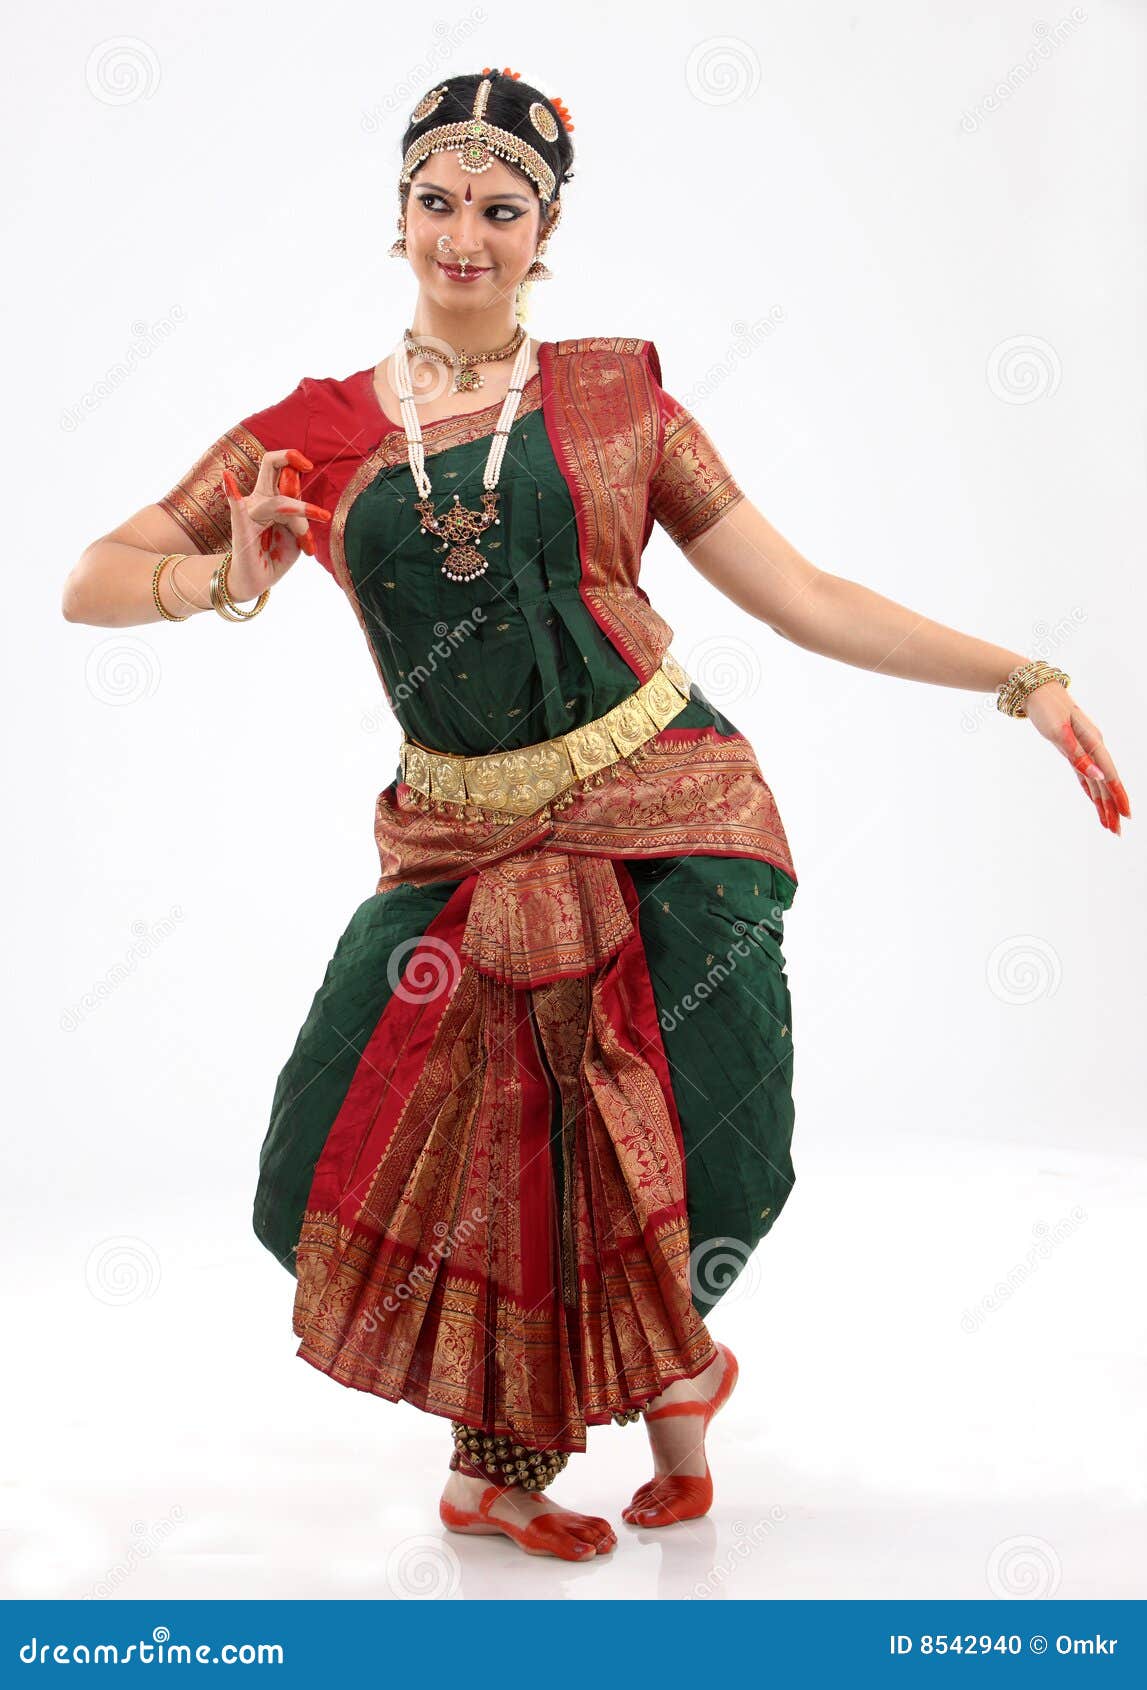 Dances in India - Joyful Travel Experience